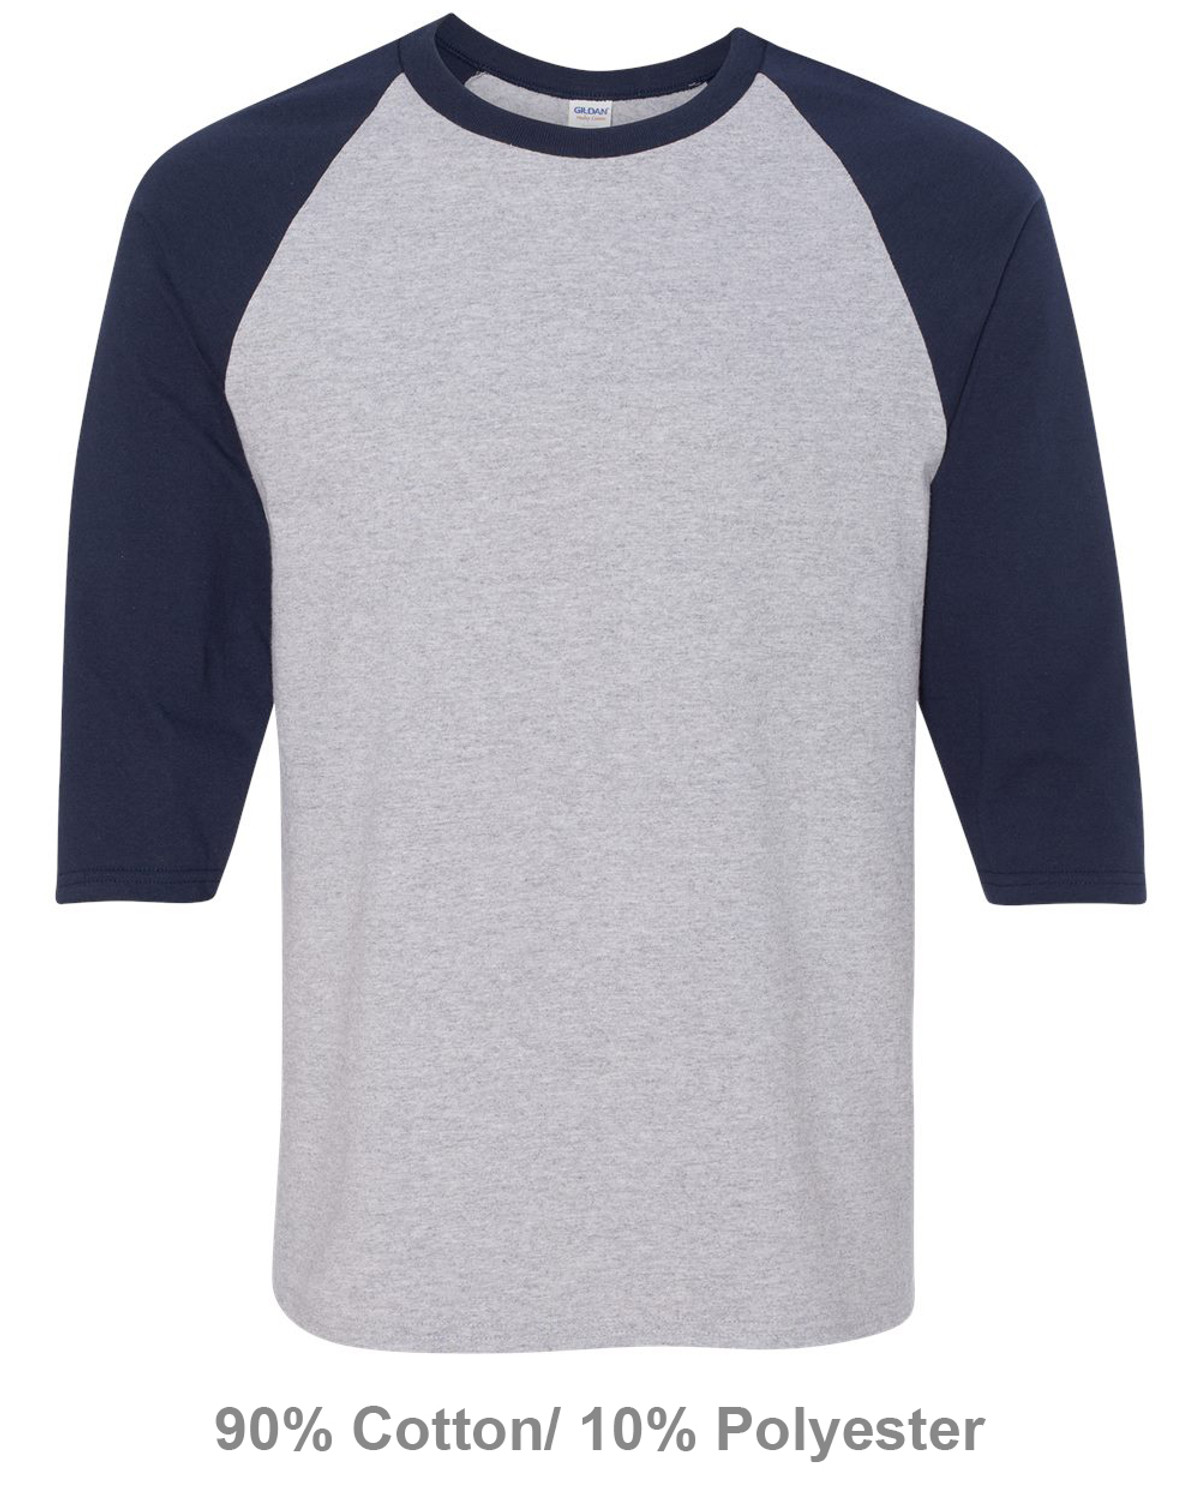 Men's Full Length Sleeve Raglan Cotton Baseball Tee Shirt, Black